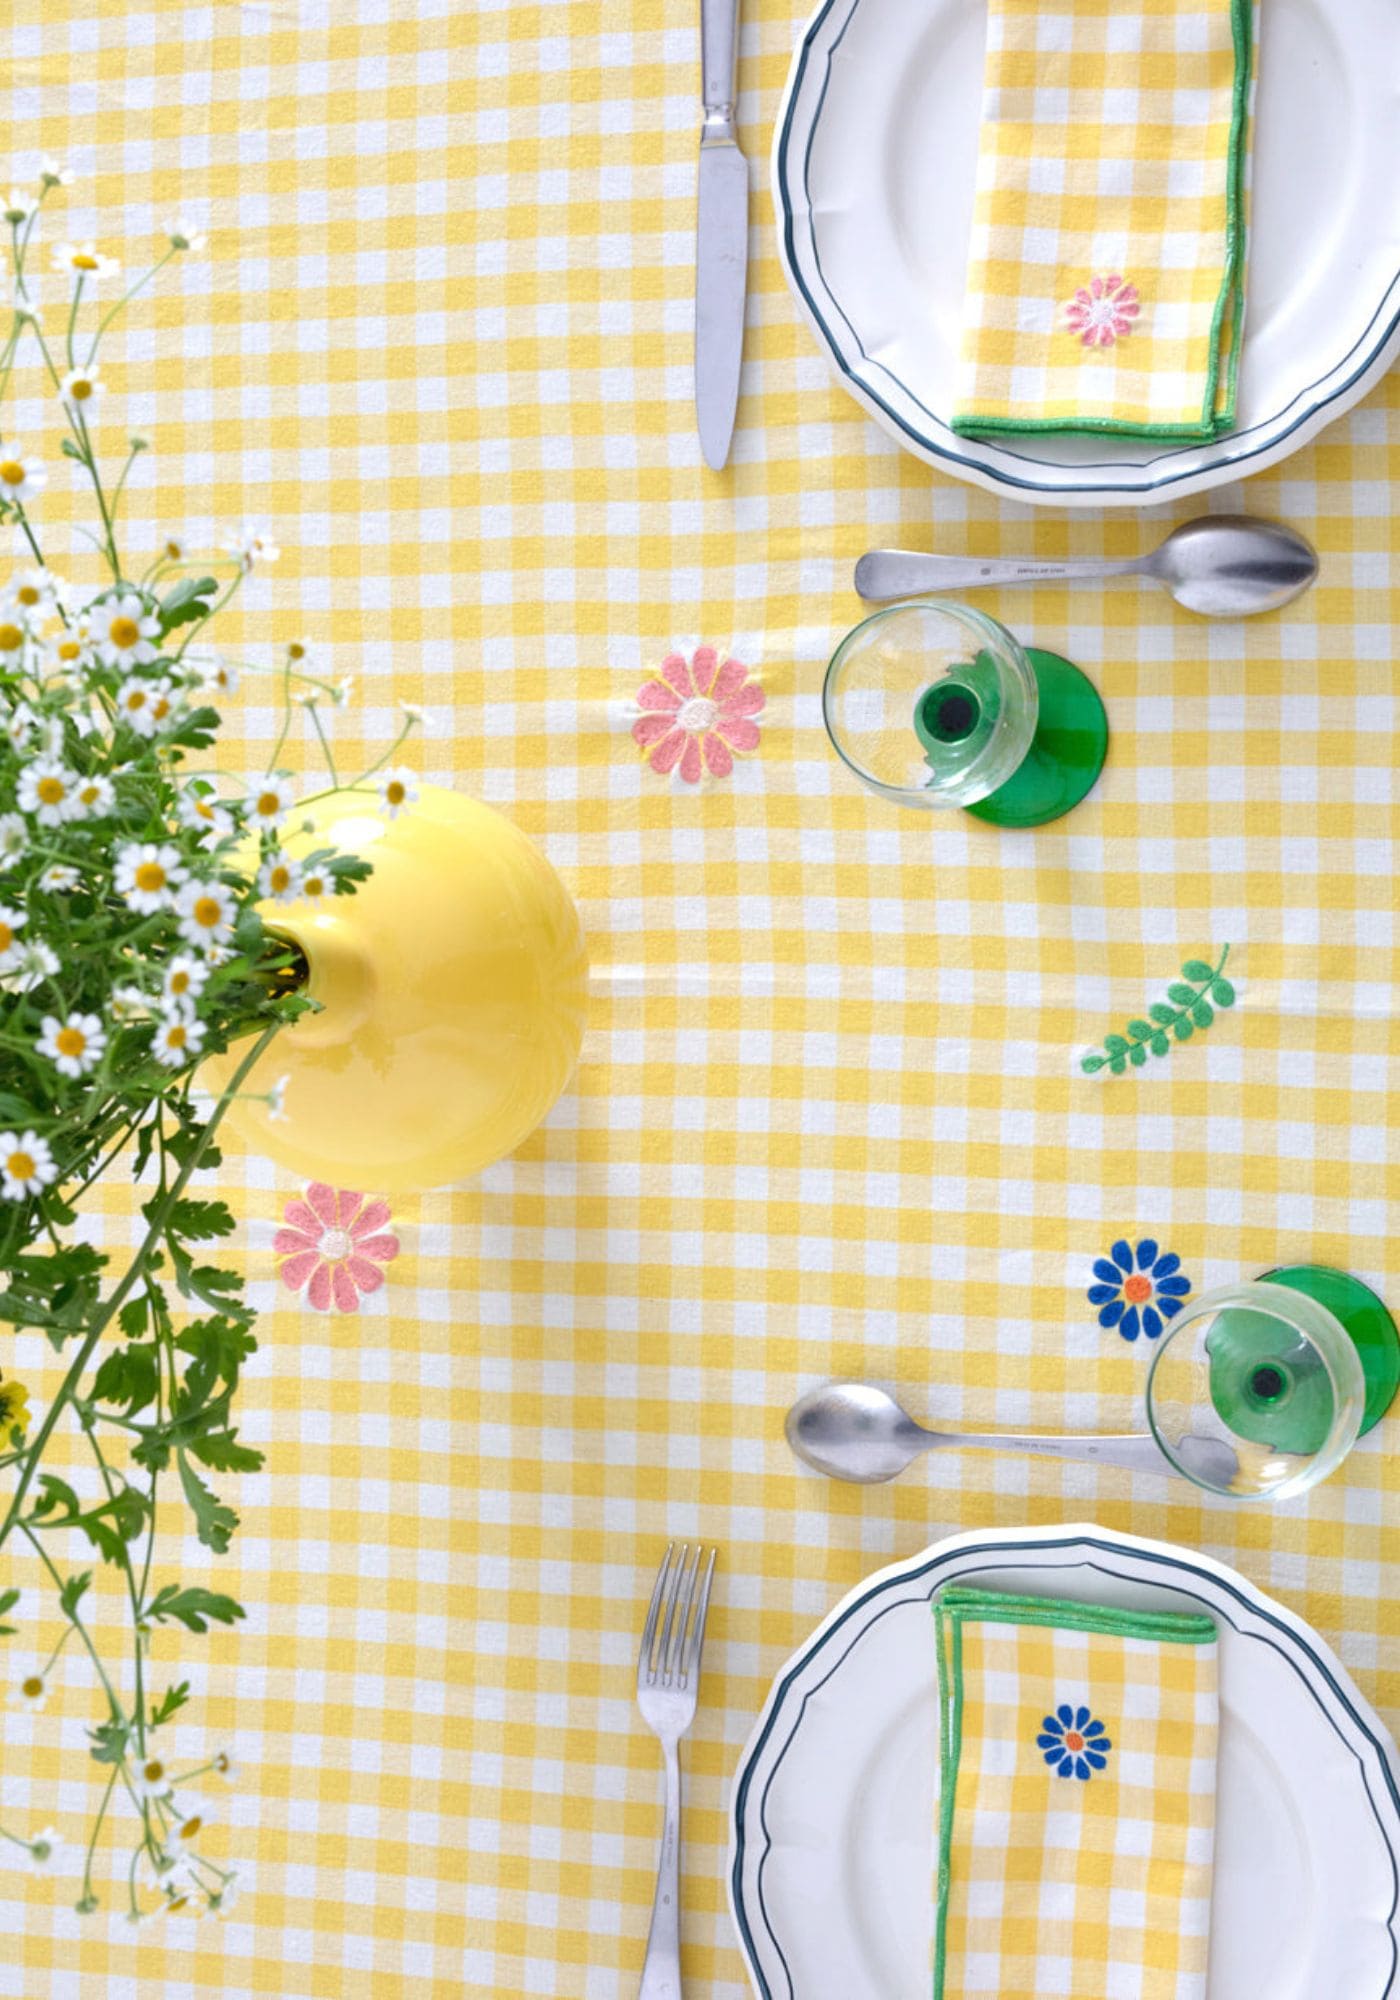 nappe-khalo-yellow-art-table-jaune-maison-dinette